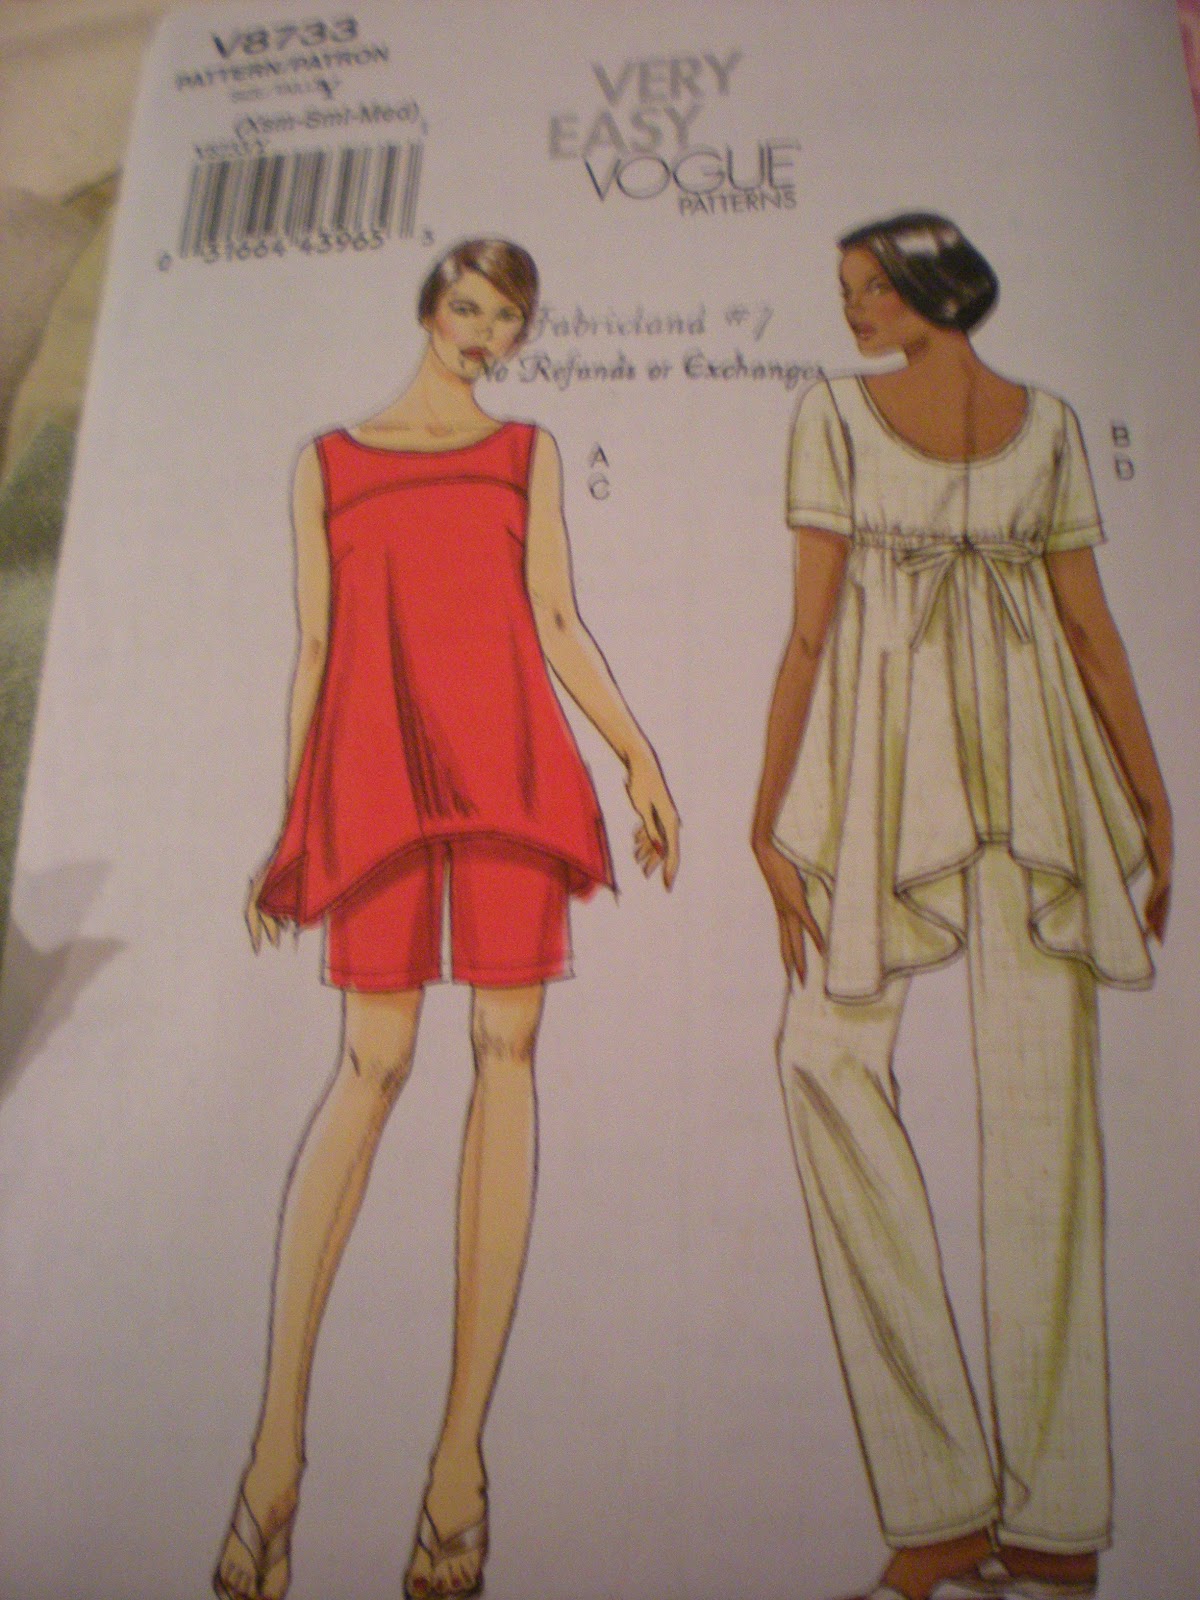 Sew Essentially Sew: Vogue Tunic Pattern #8733